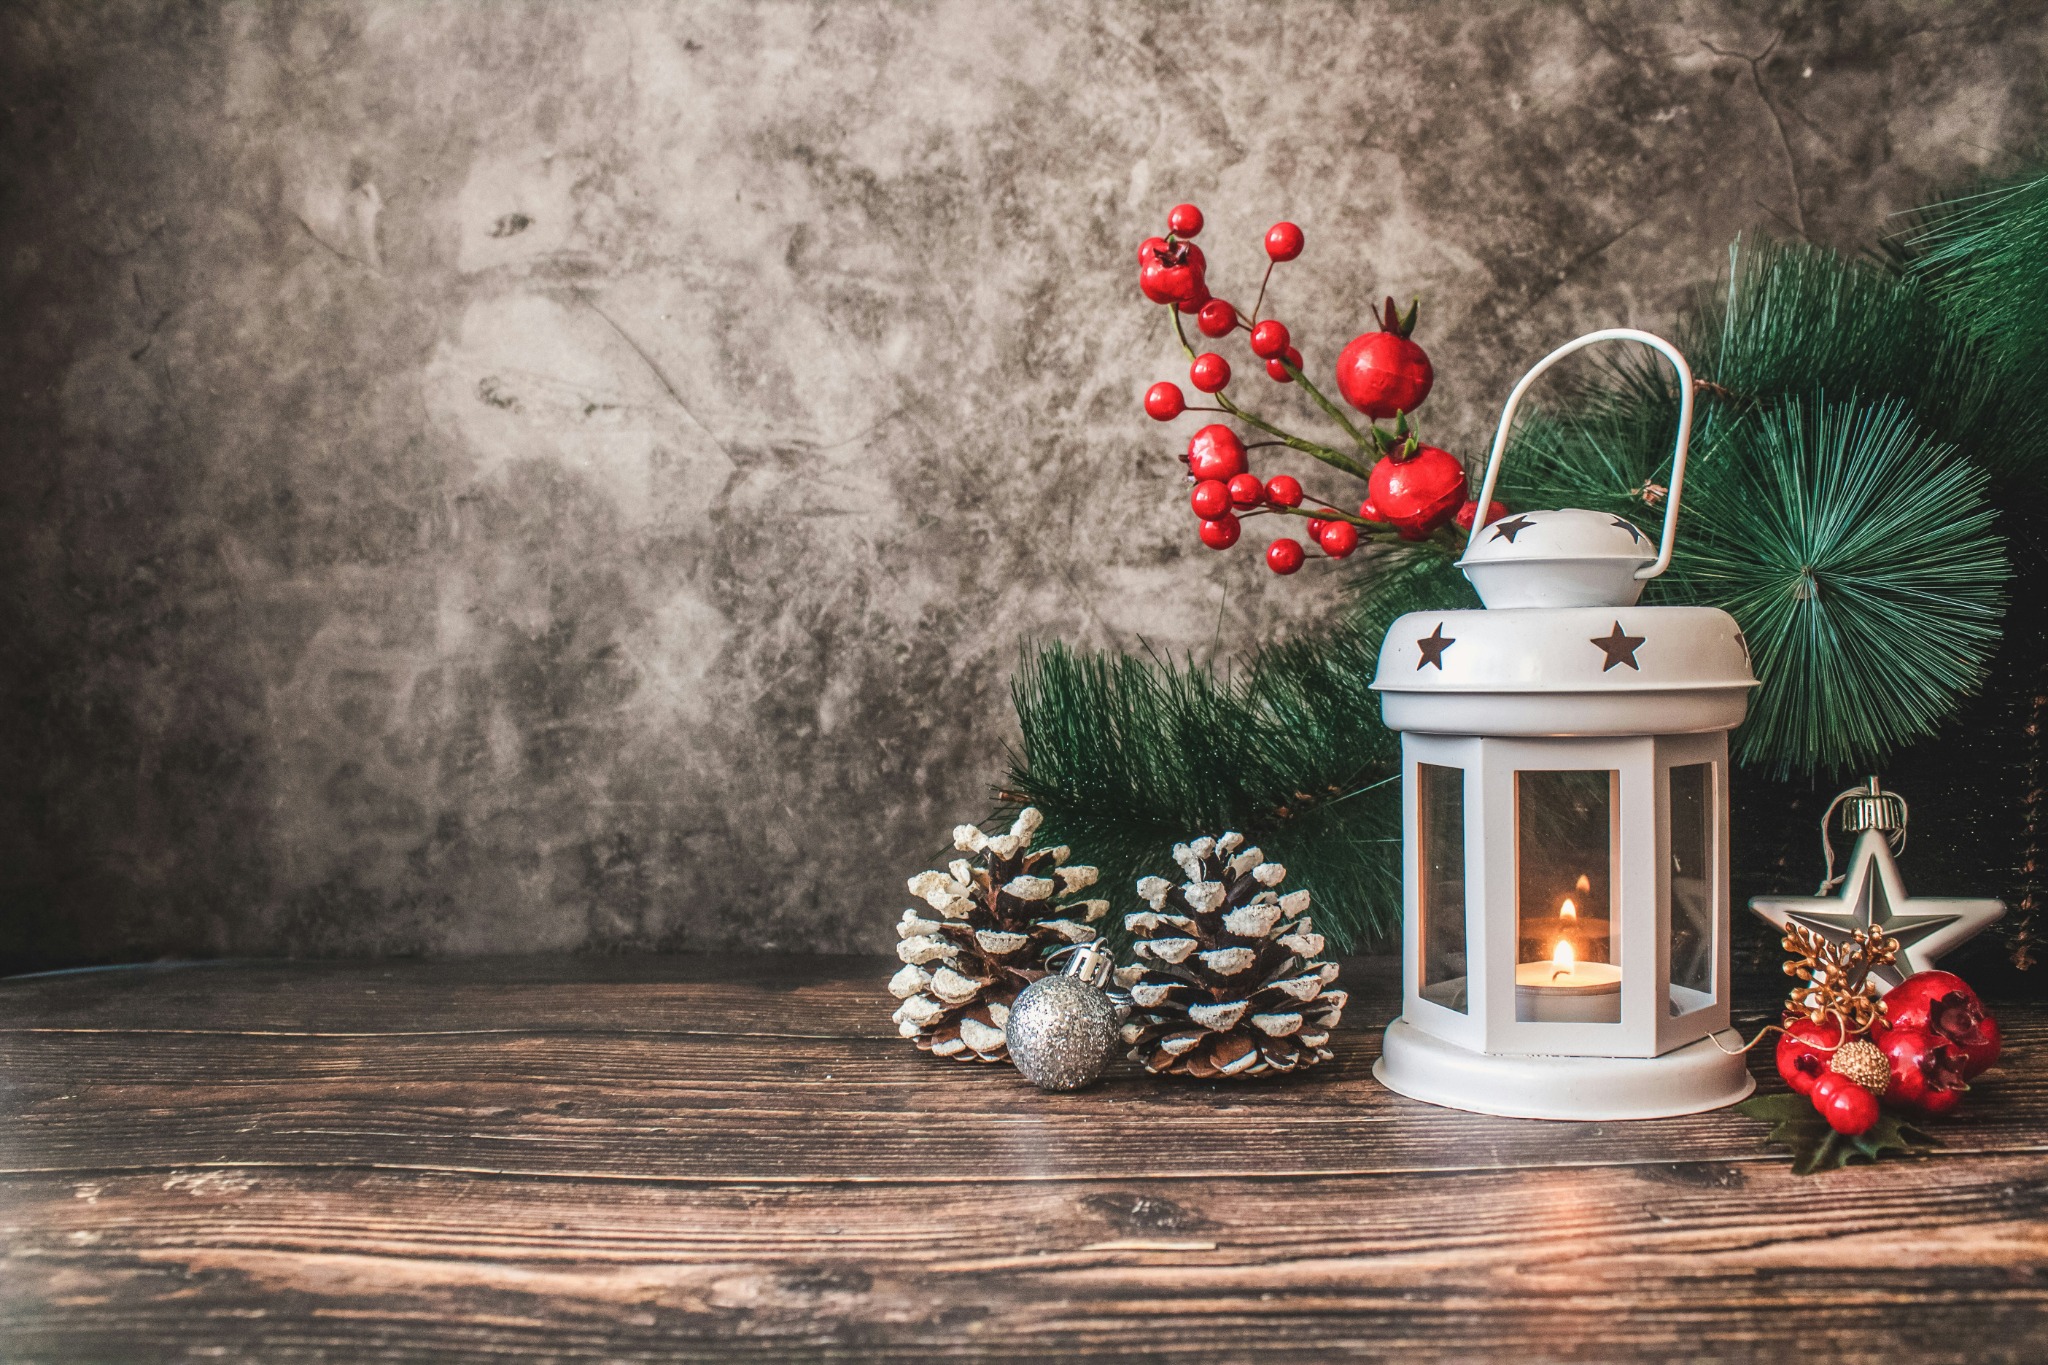 Christmas lantern and decorations